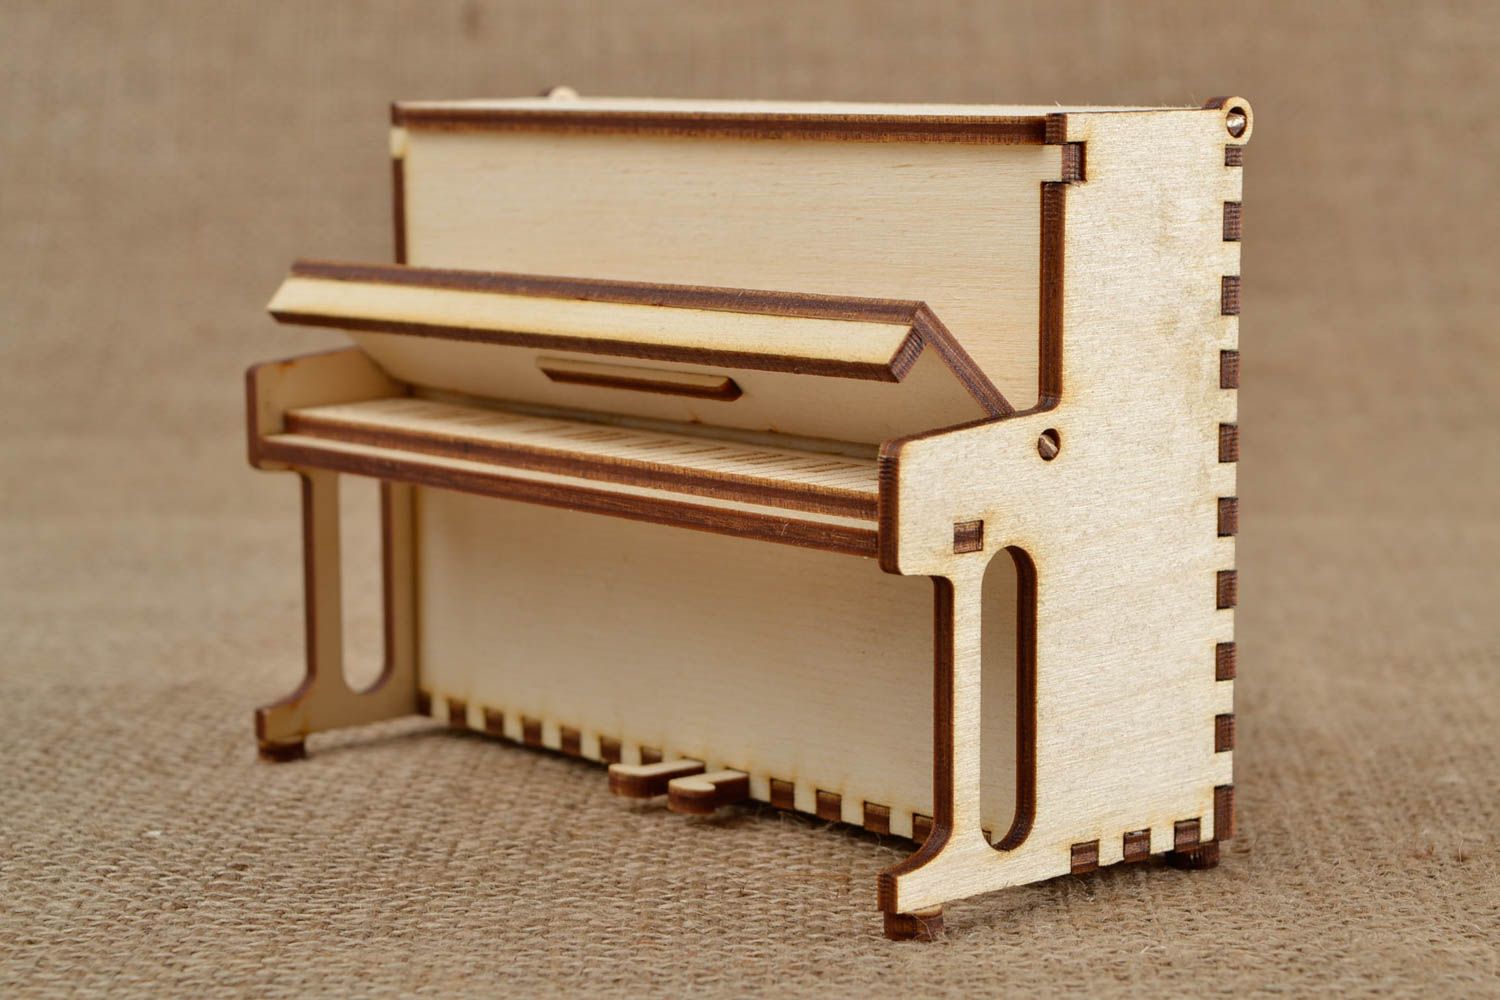 Handmade designer wooden toy unusual interior element blank for creativity photo 1